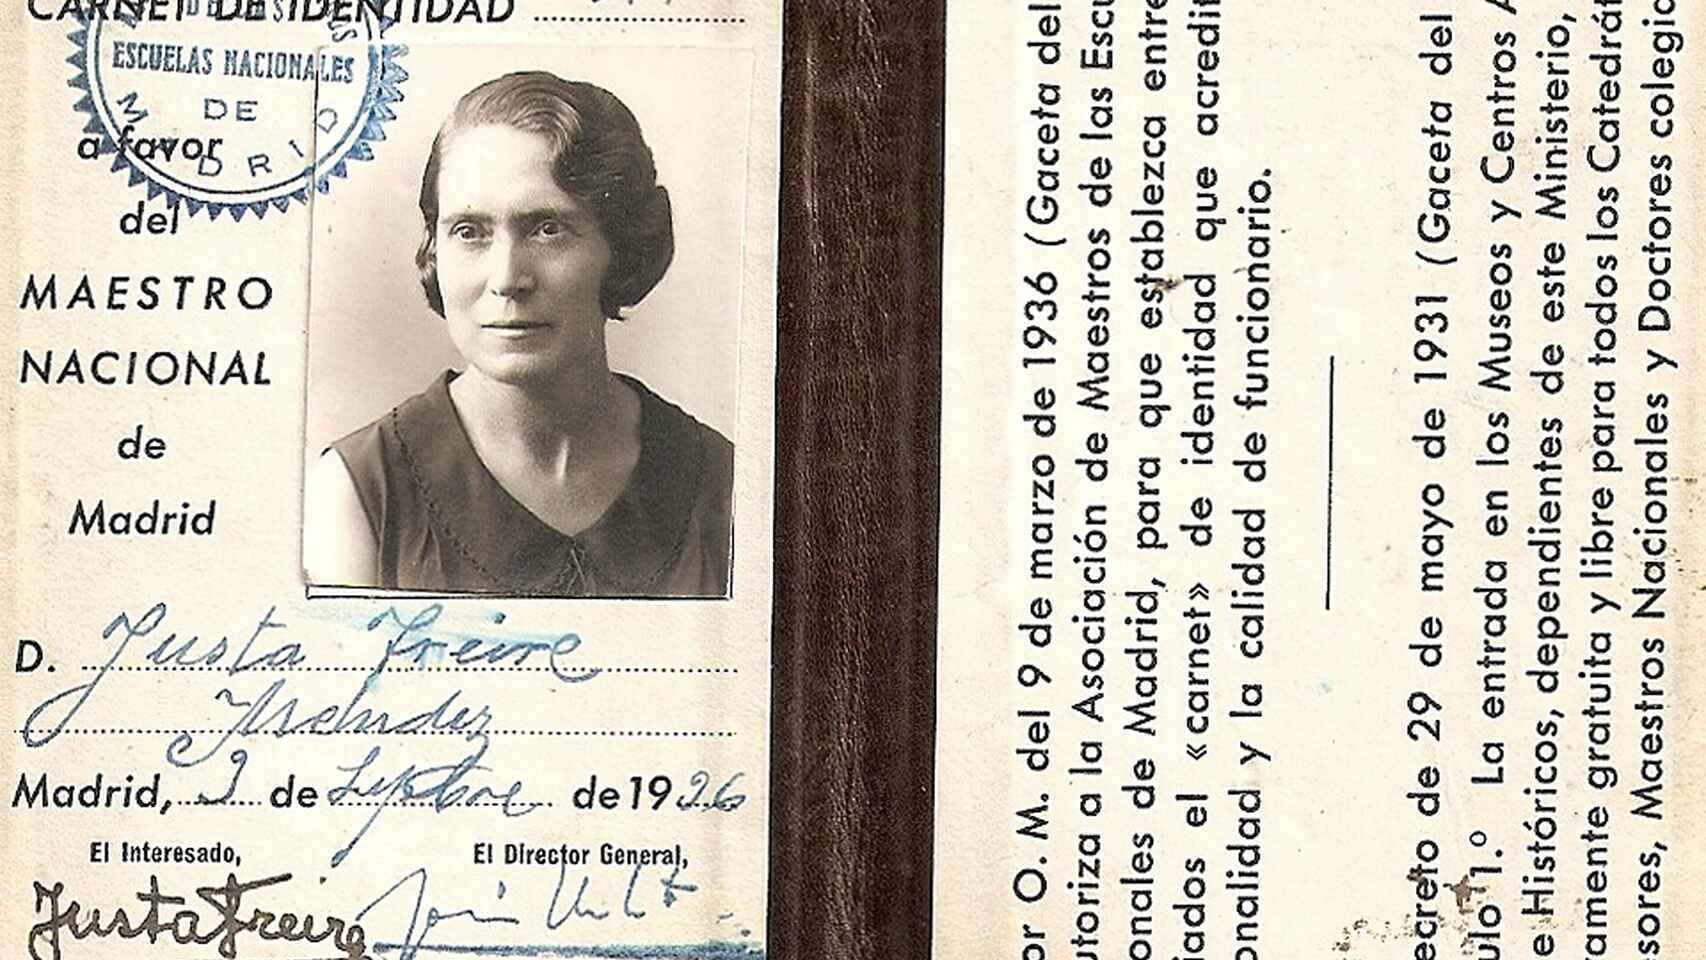 Carnet profesional de maestra de Justa Freire, de septiembre de 1936, comienzos de la guerra civil.